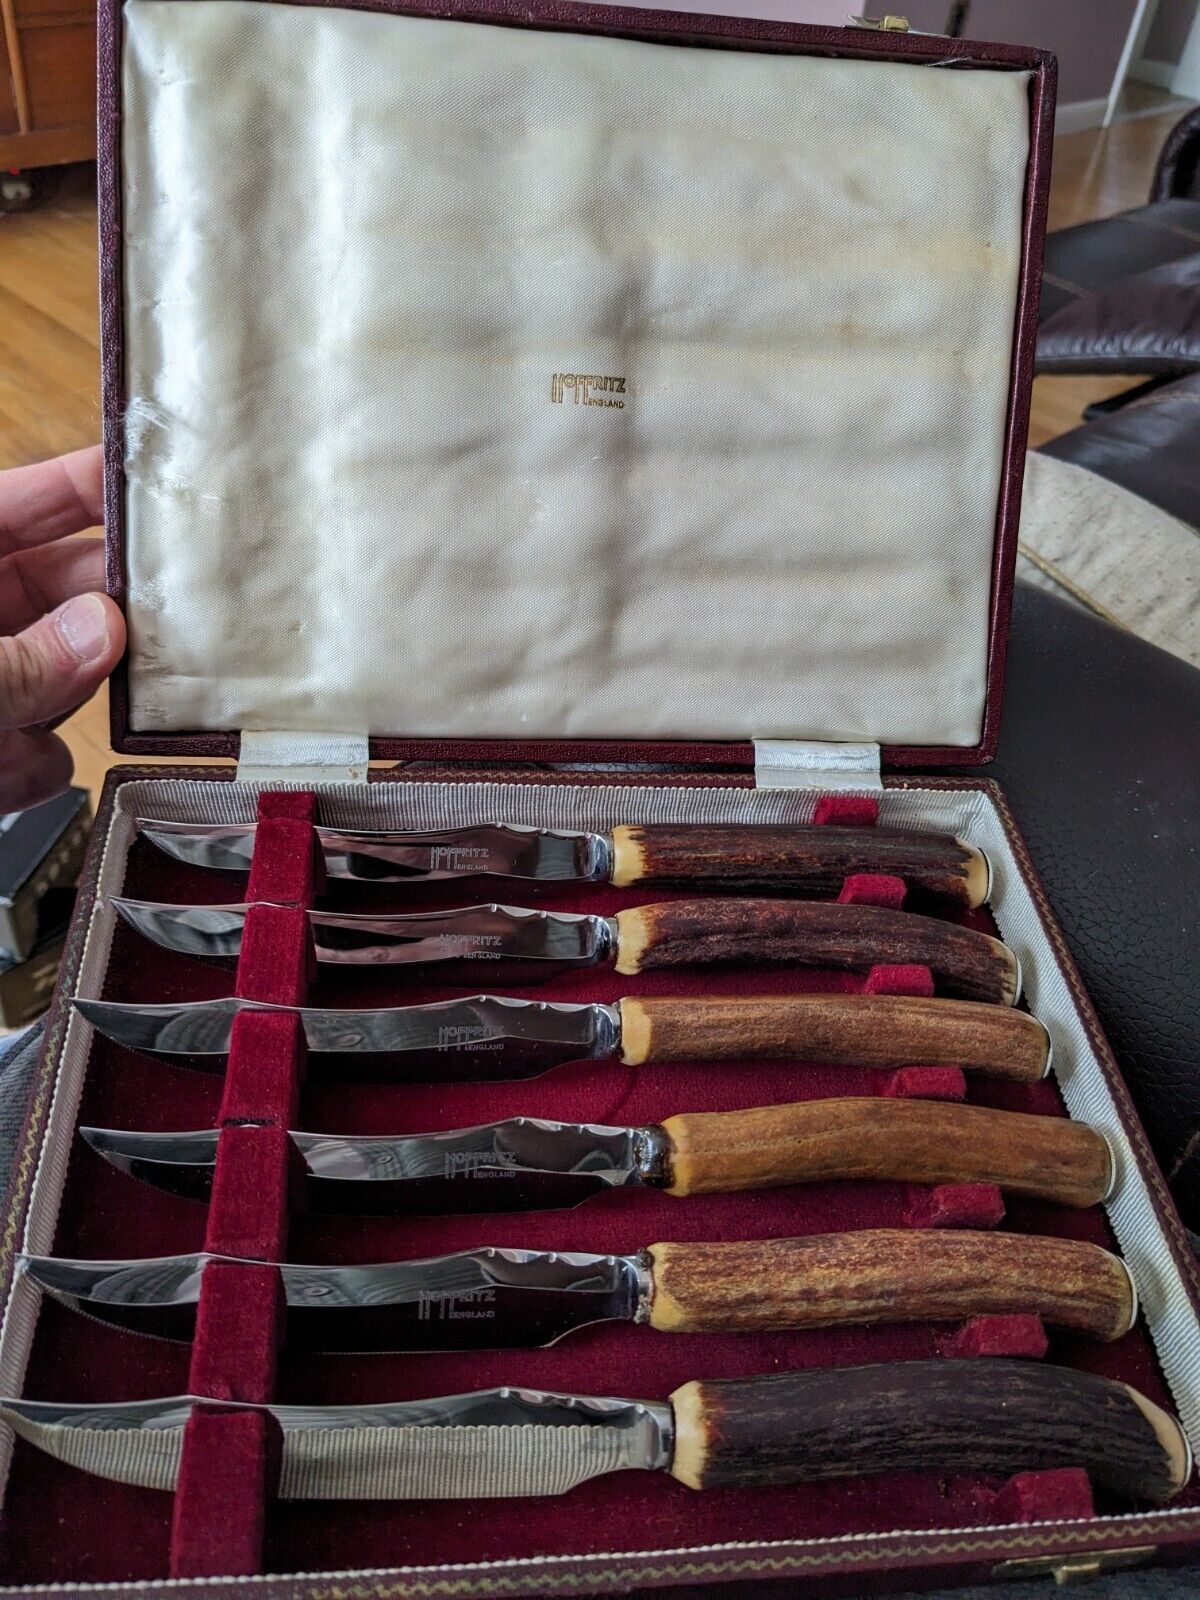 Hoffritz England genuine staghorn steak knives - set of 6